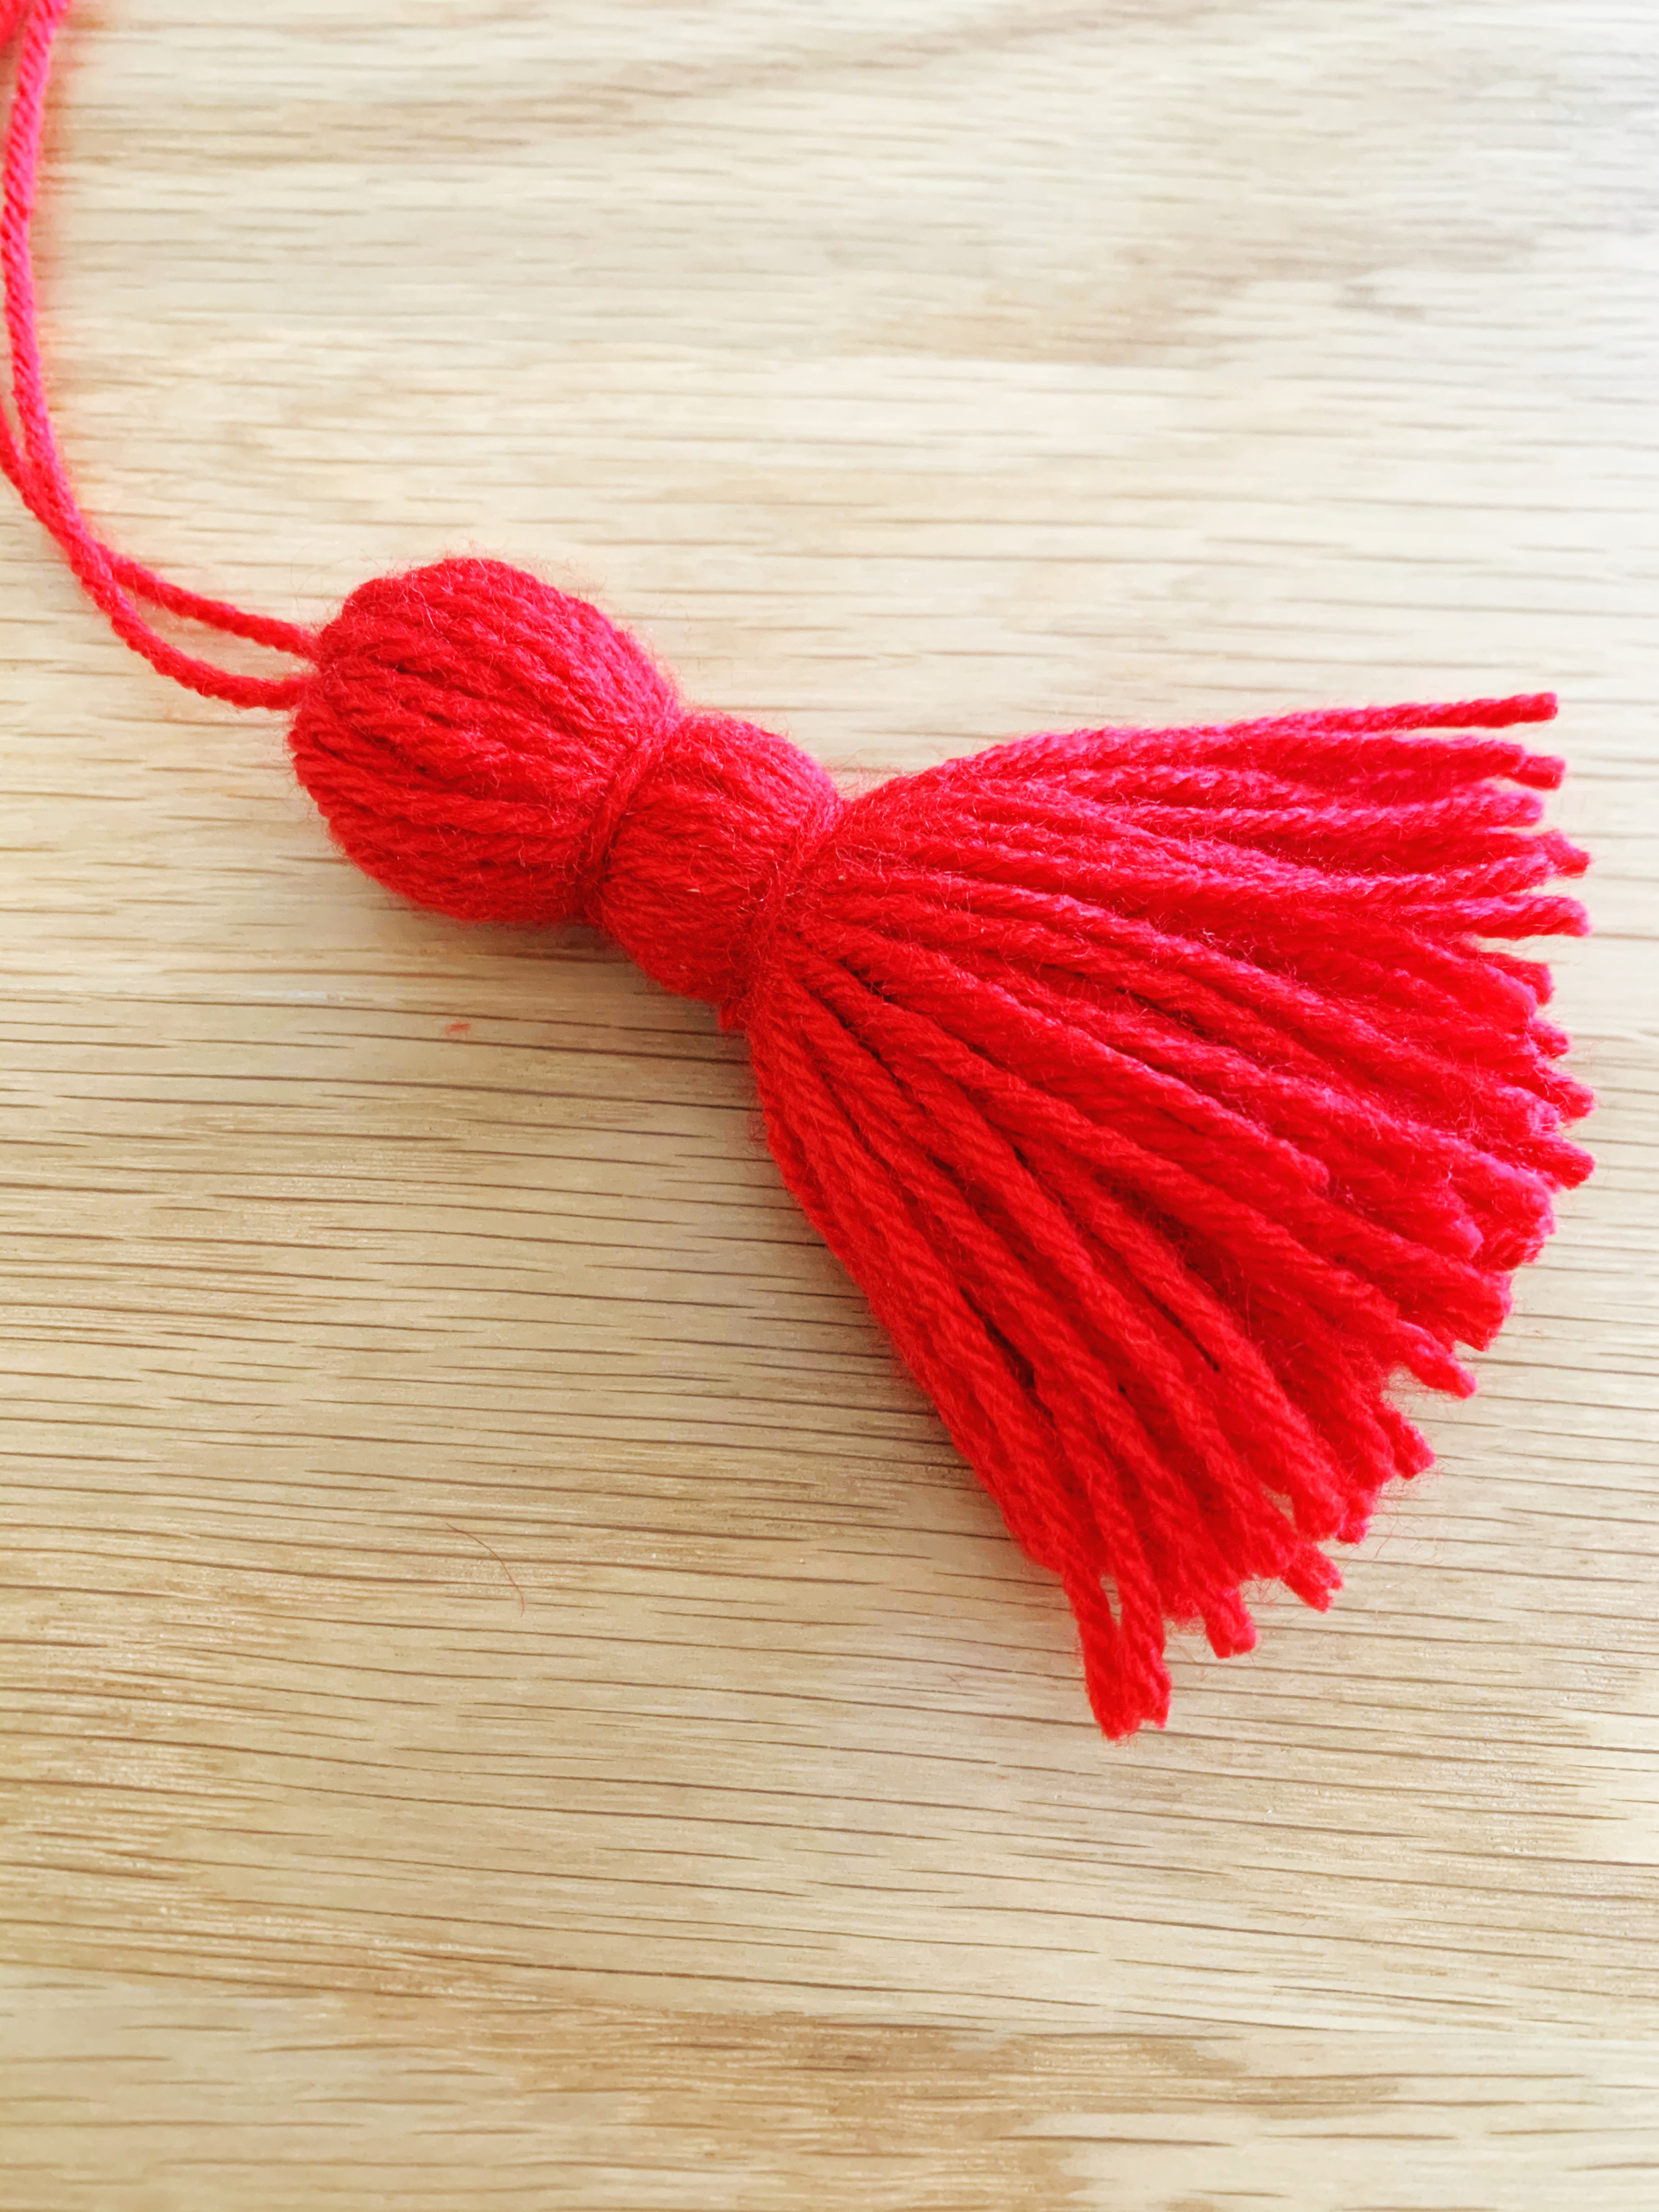 25pcs 14cm/5.5 Inch Bookmark Tassels Soft Silky Cord Loop Craft Tassels Red